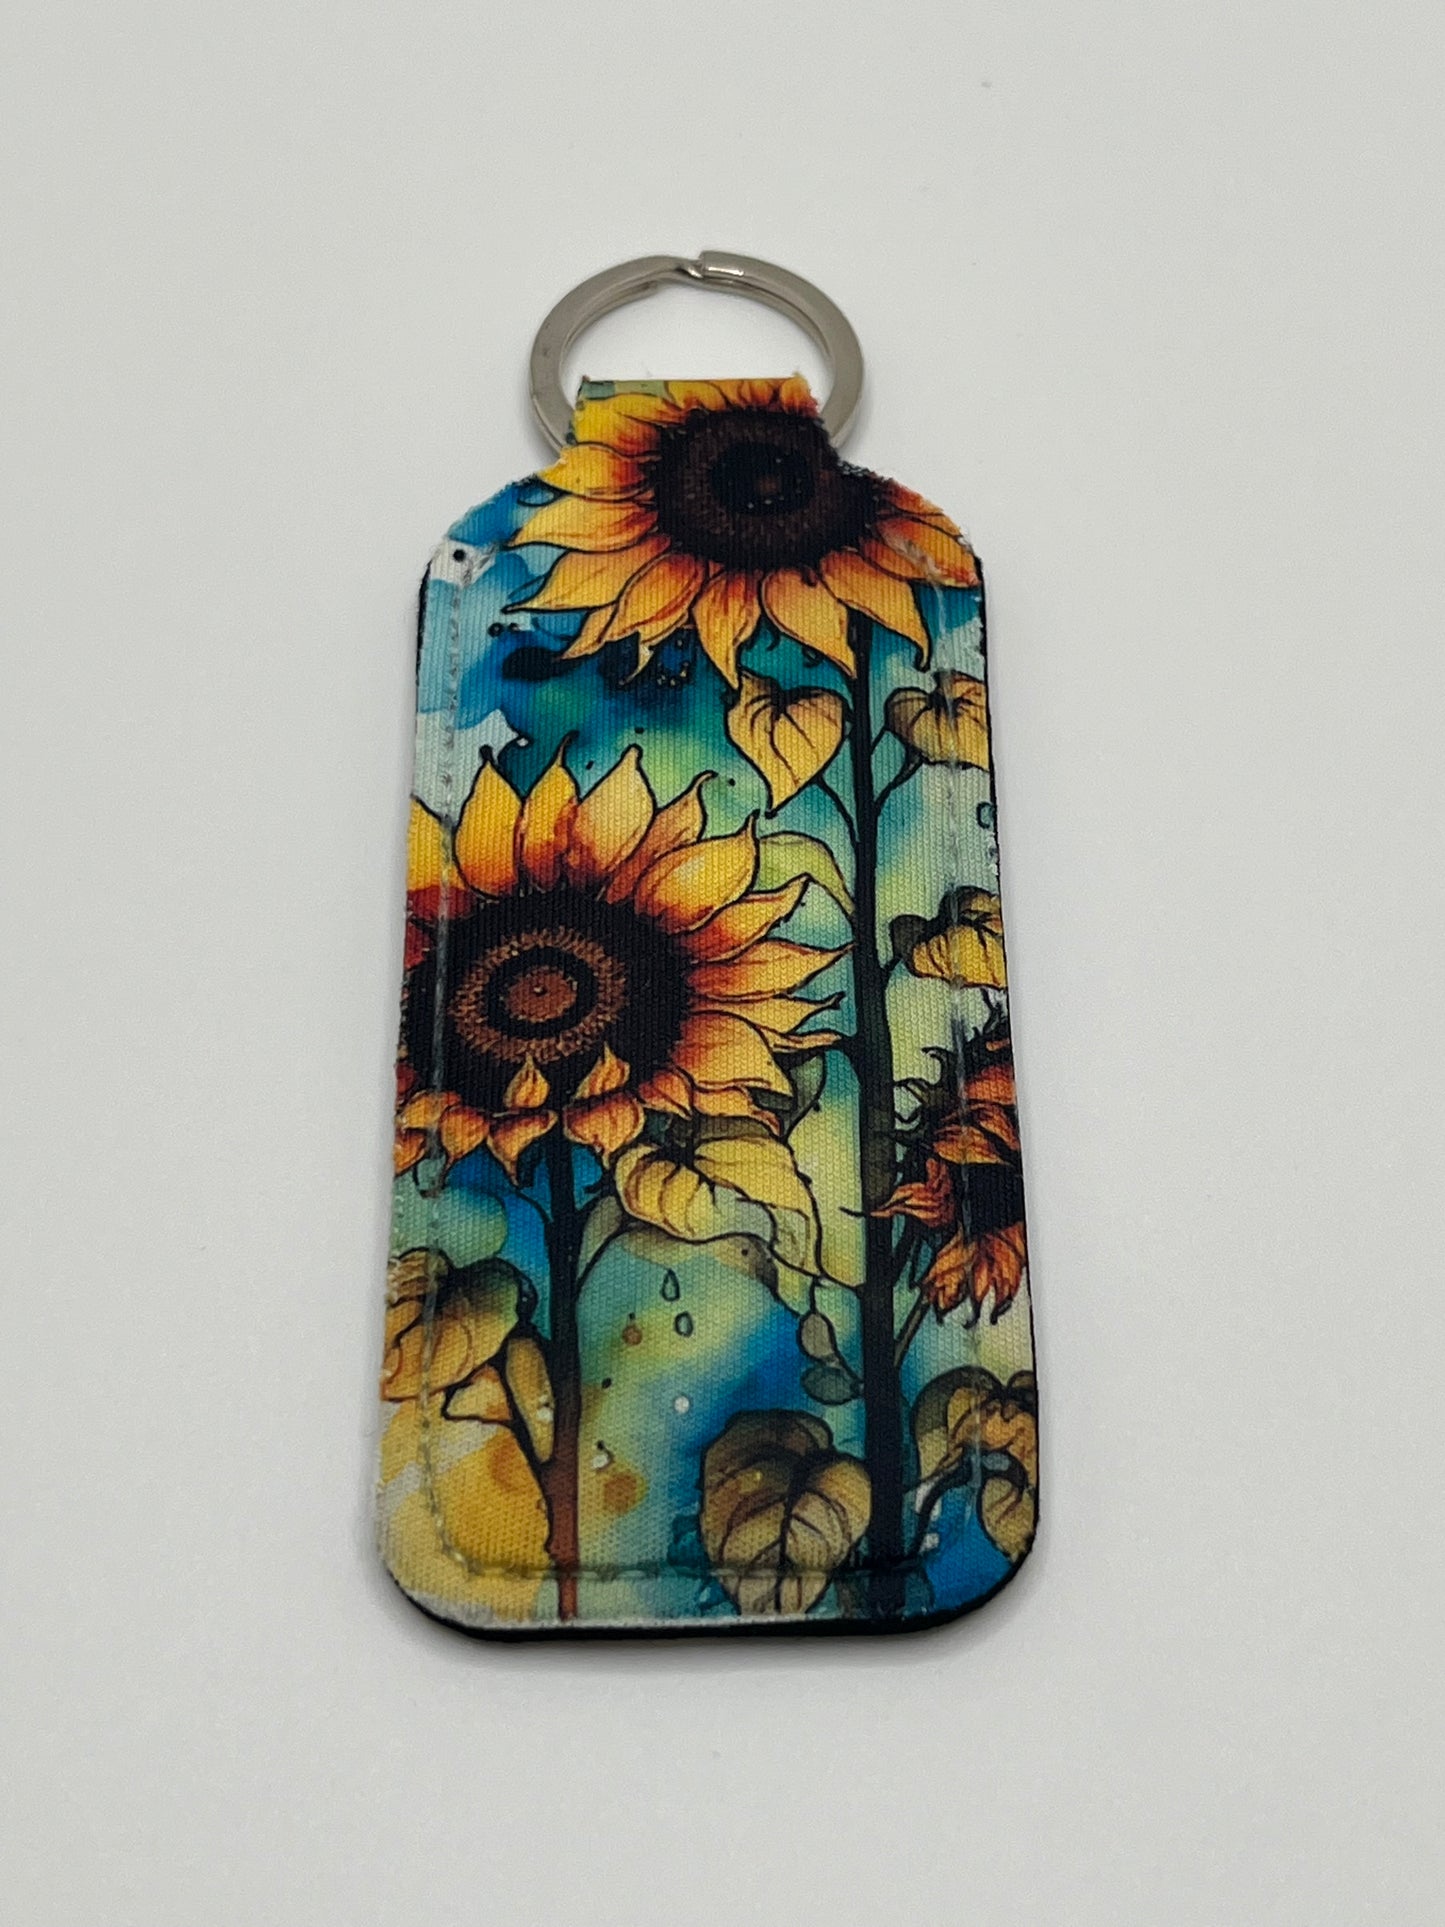 Sunflowers-Keychain Accessory Holder